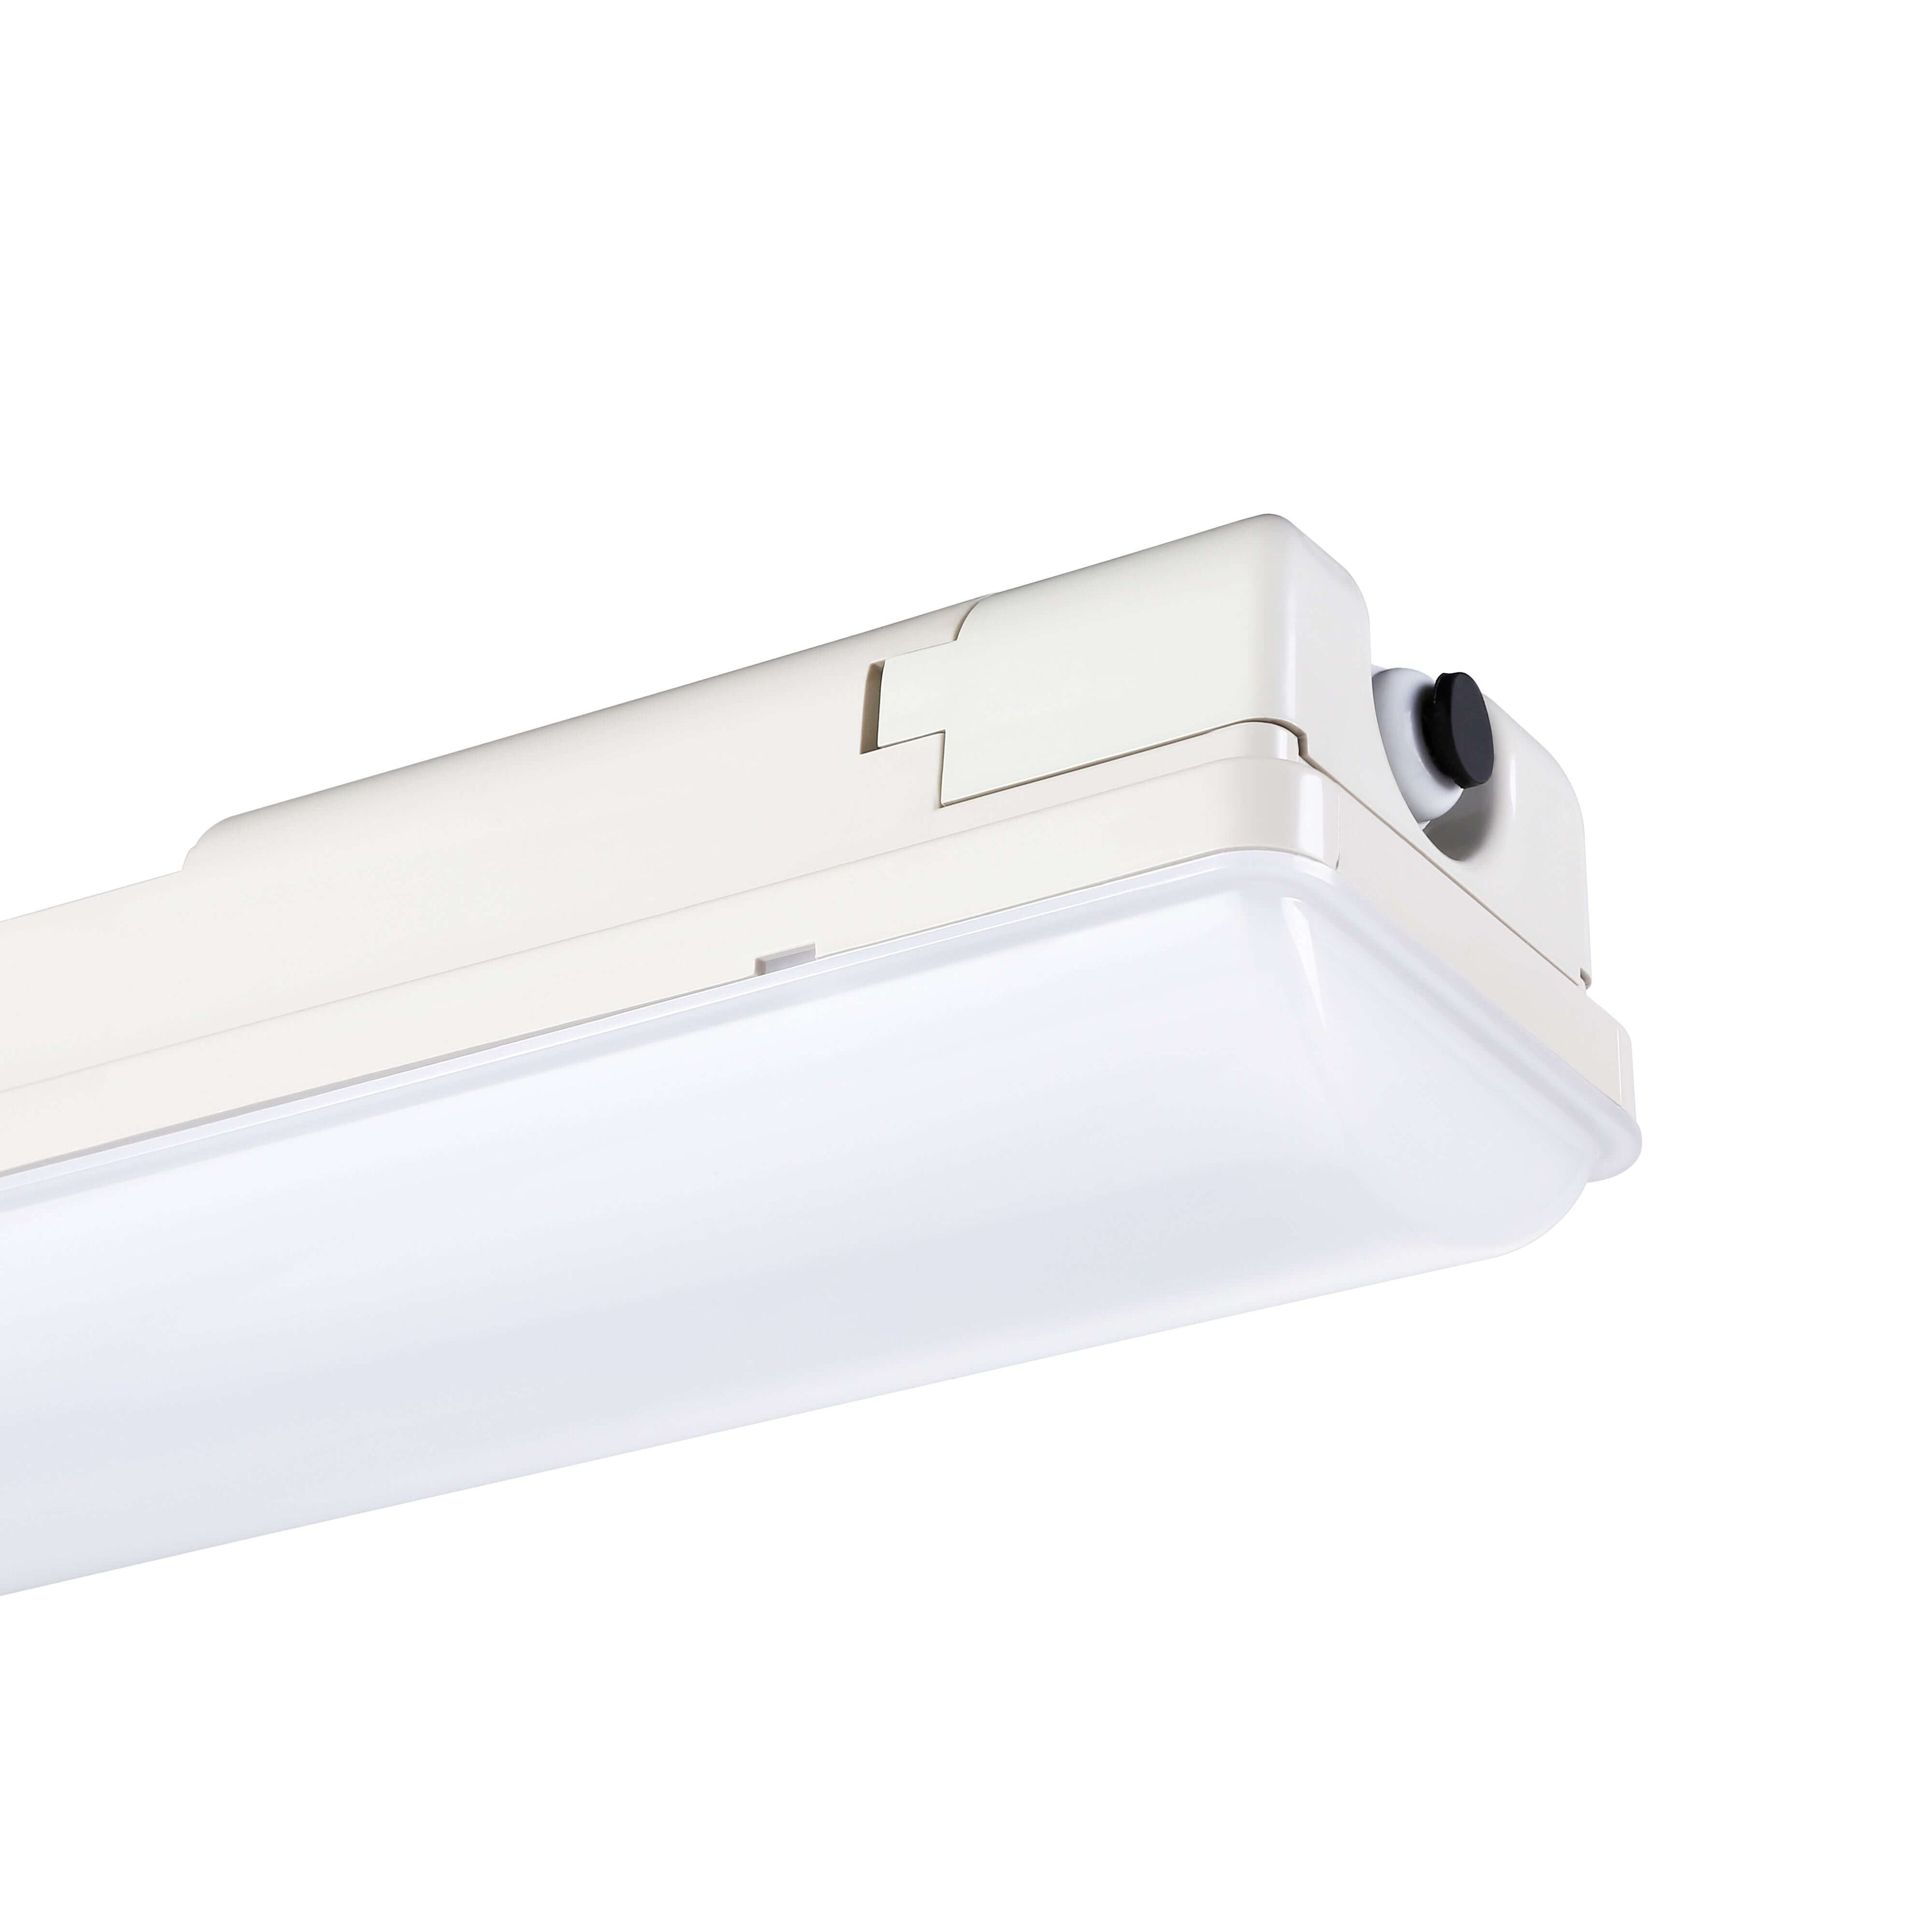 AquaShield 4' Vapor Proof LED Linear Light - 40W - 5000K